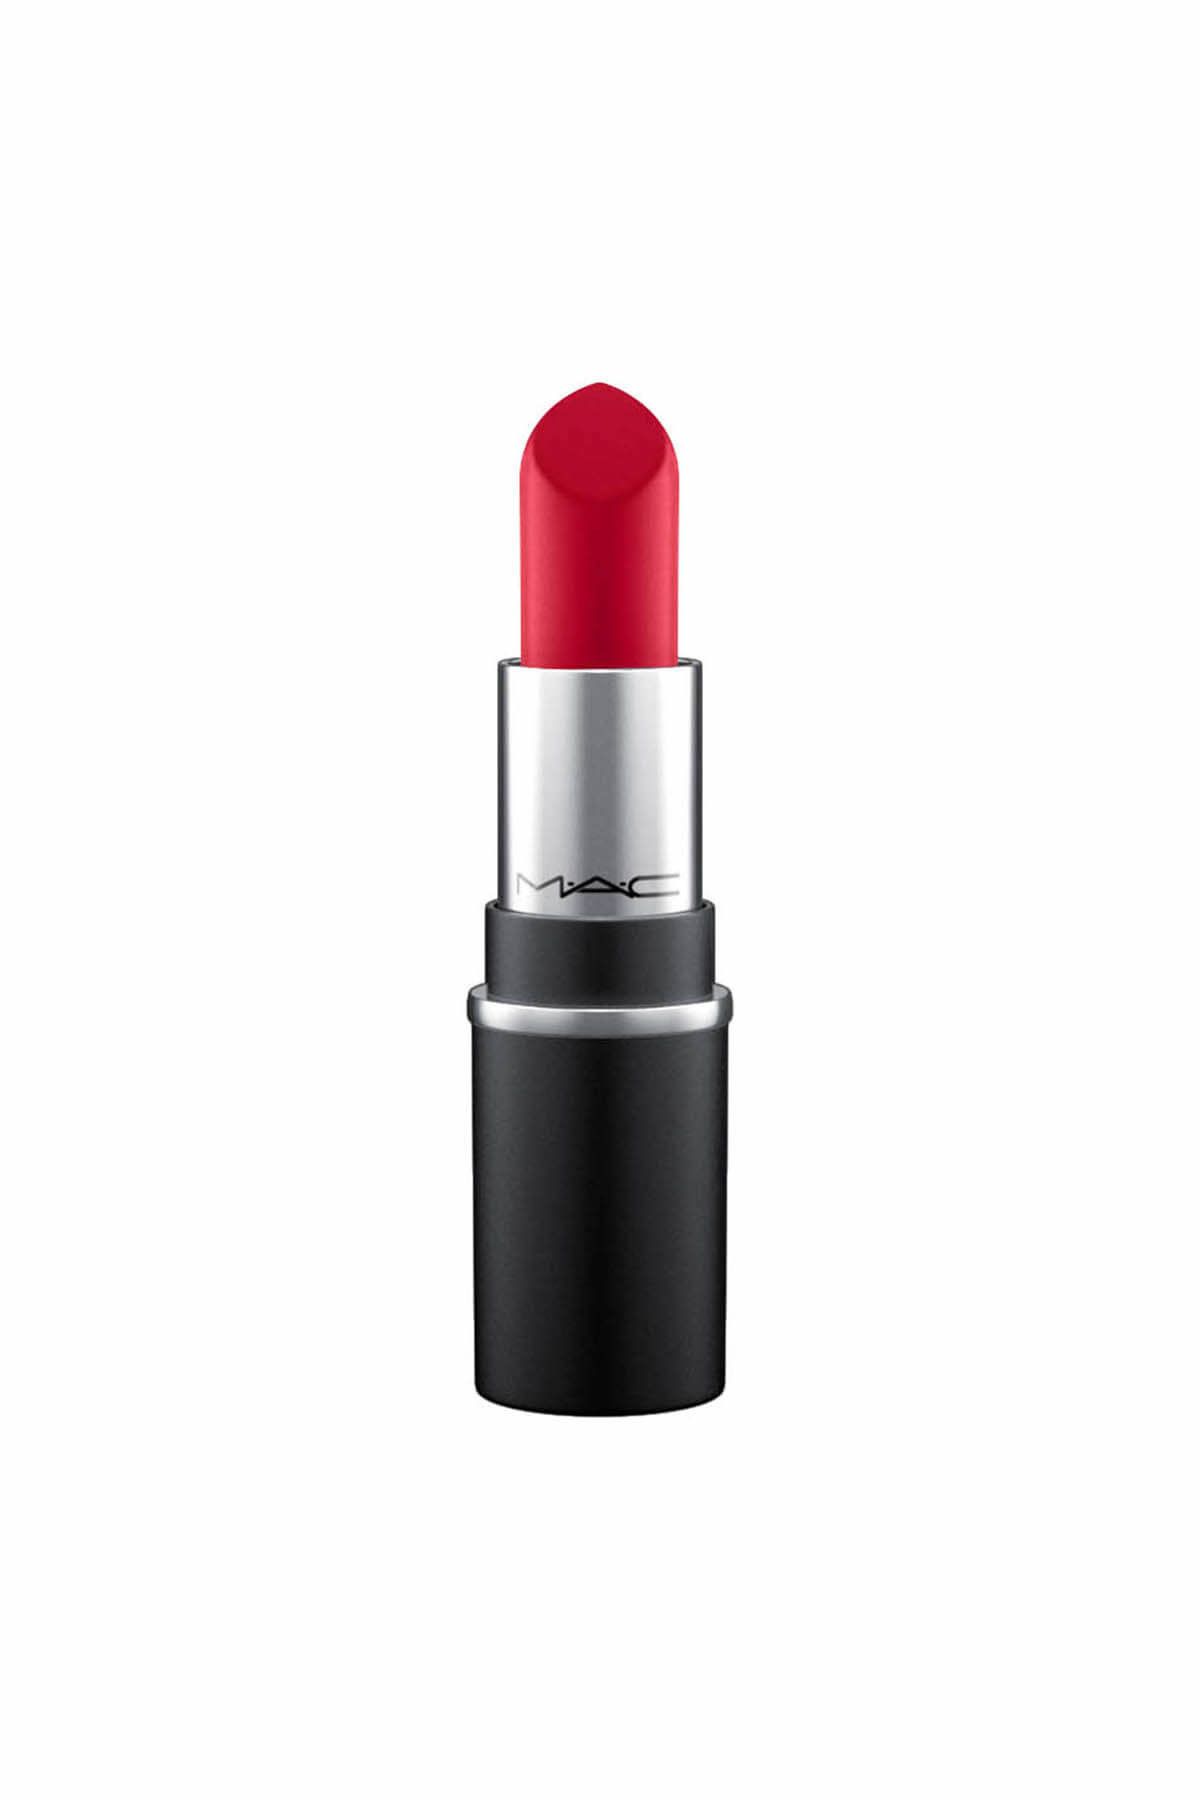 Mac Ruj - Mini Traditional Lipstick Ruby Woo 1.8 g 773602473175